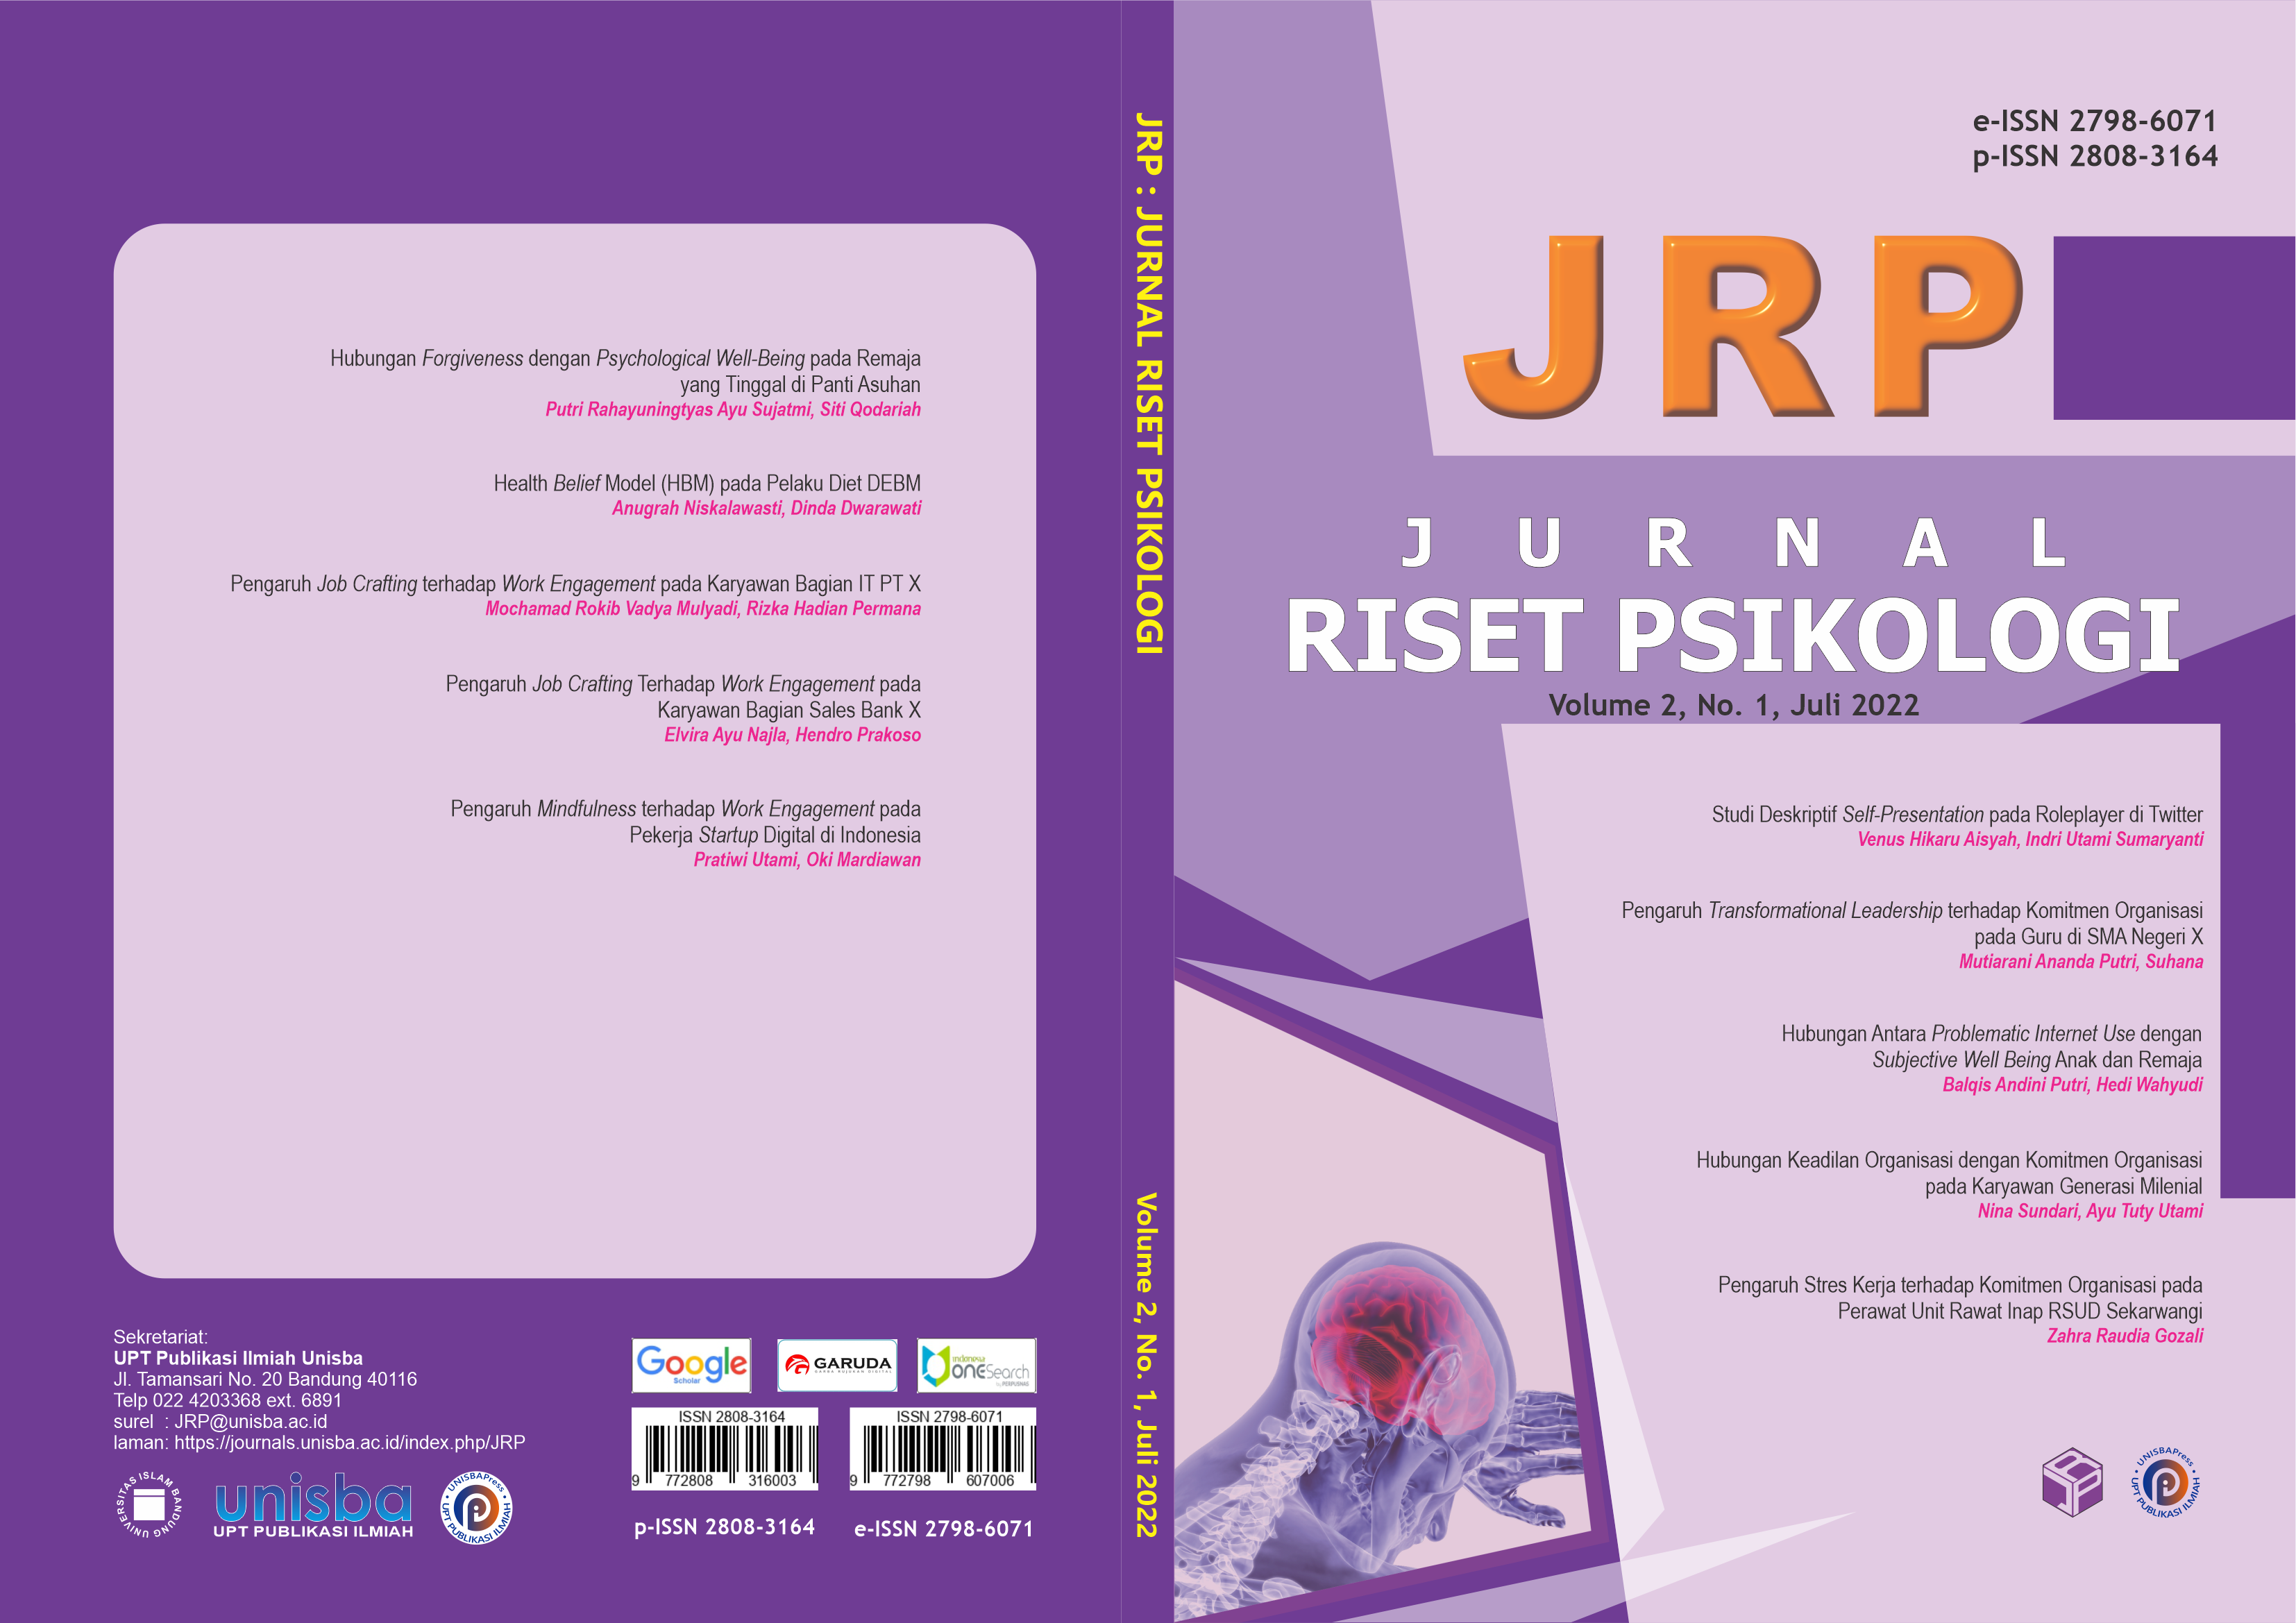 					View Volume 2, No. 1, Juli 2022, Jurnal Riset Psikologi (JRP)
				